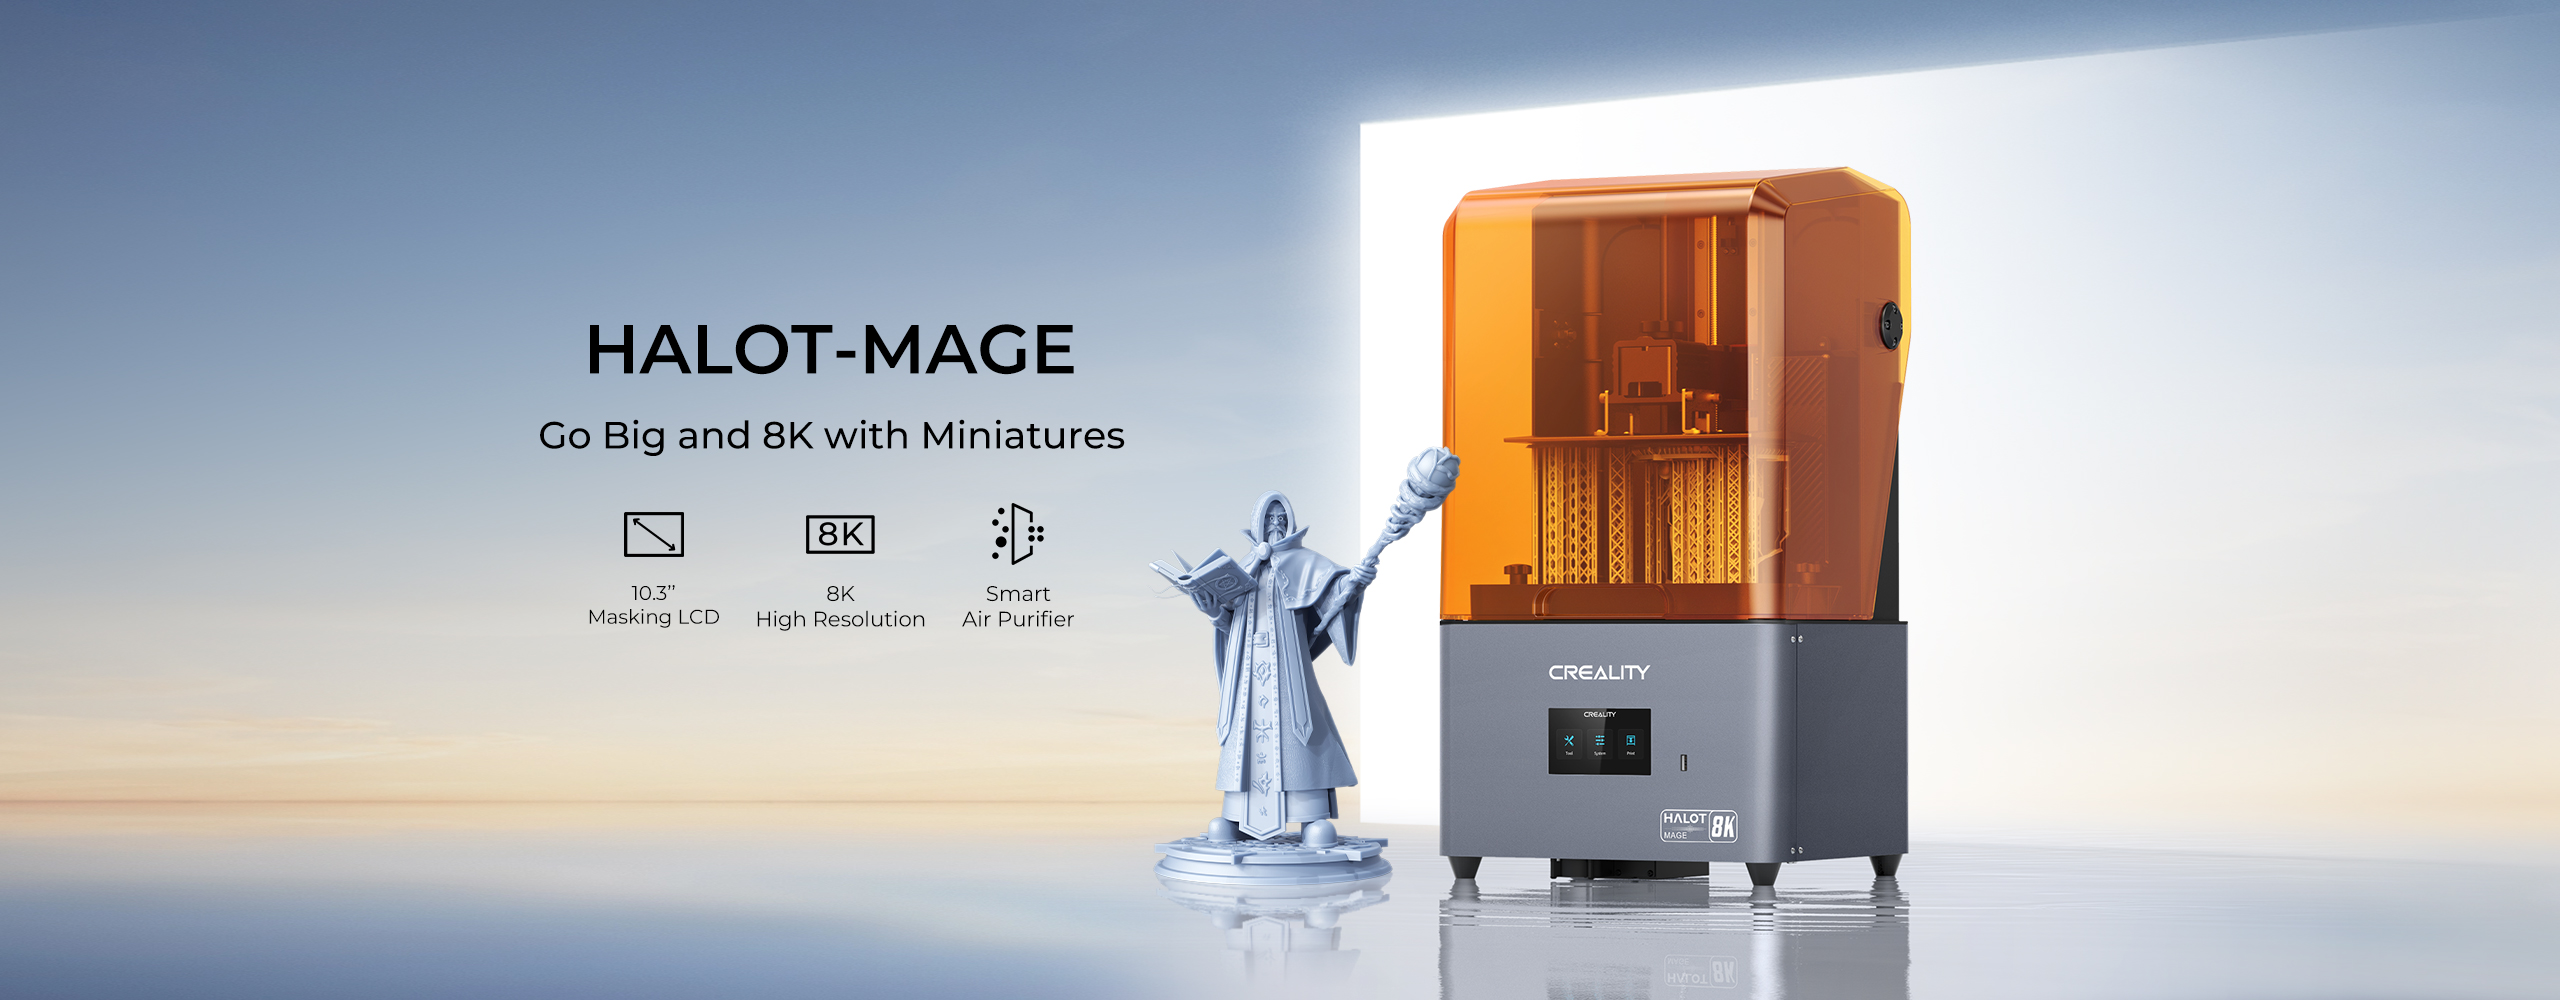 HALOT-MAGE 3D Printer - Creality 3D